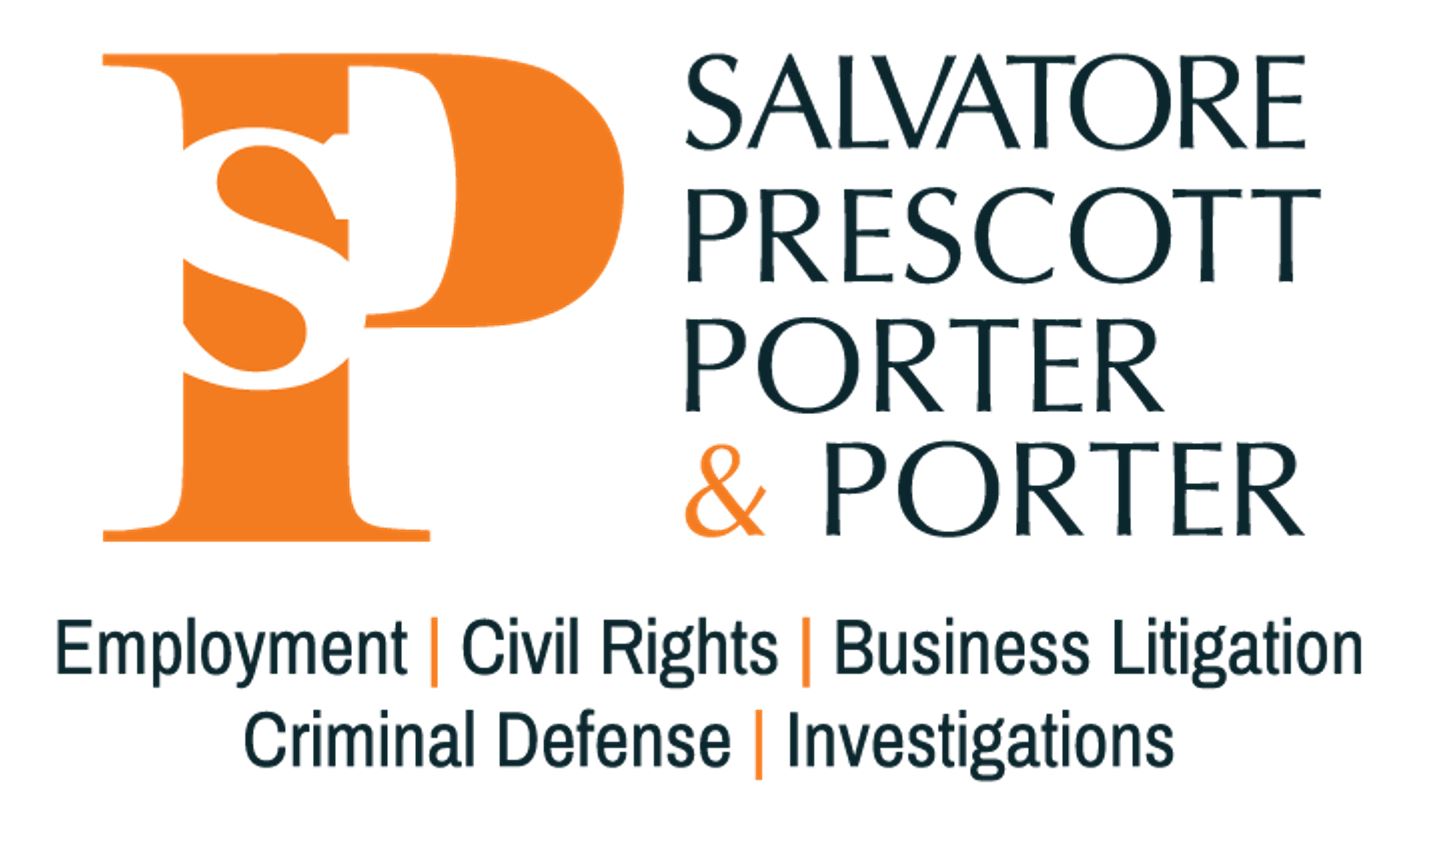 Salvatore Prescott Porter & Porter